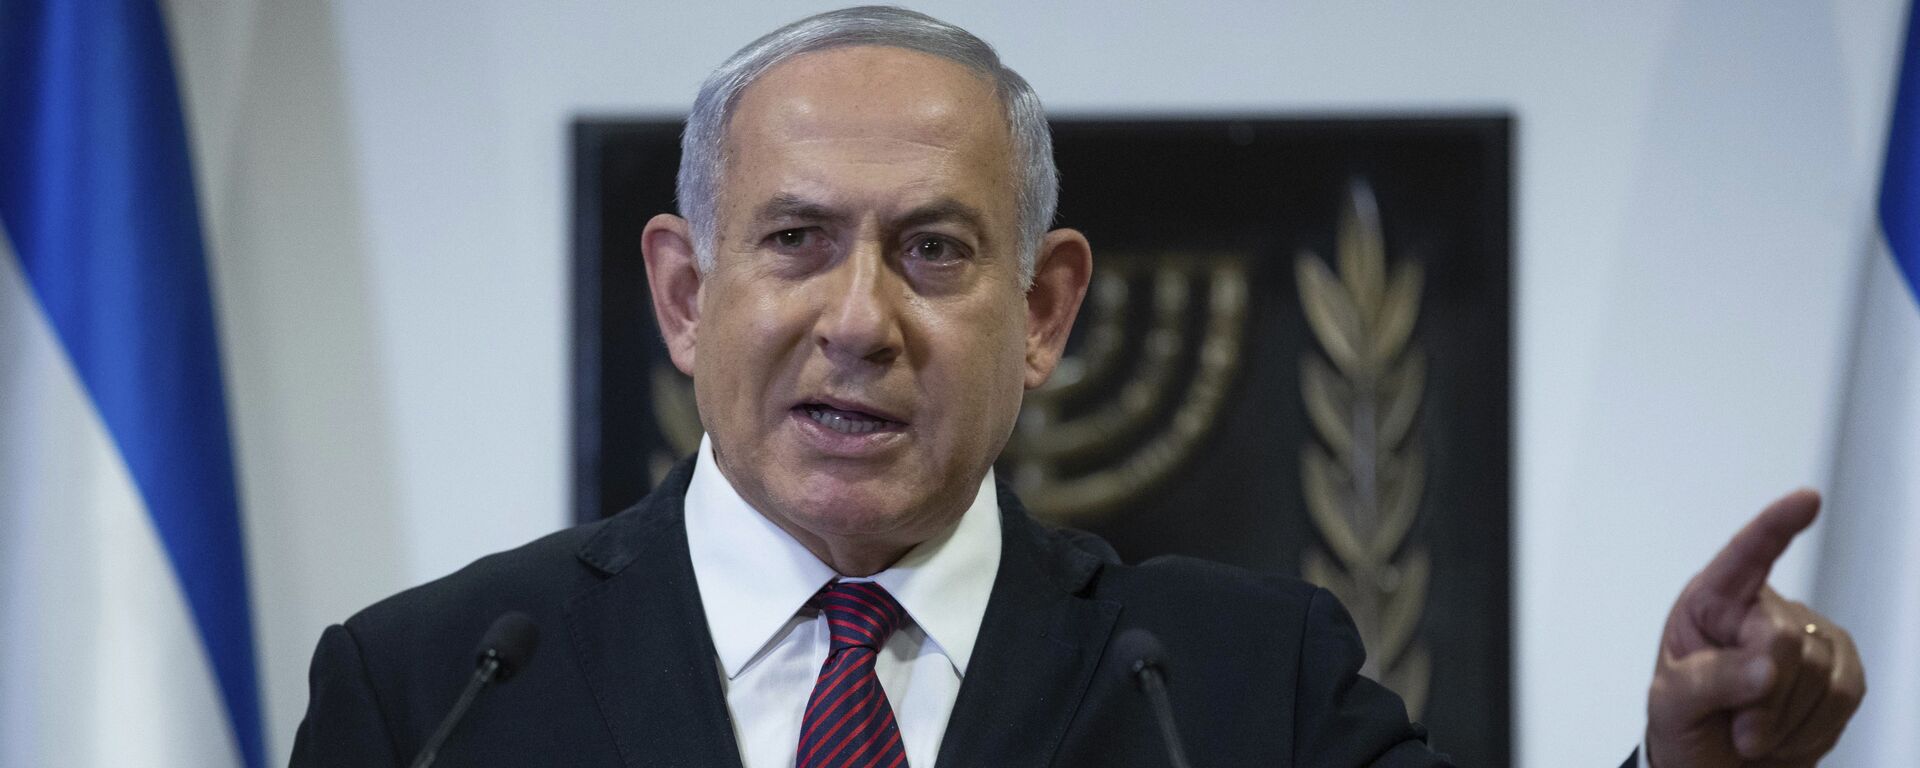 Benjamin Netanyahu, primer ministro israelí - Sputnik Mundo, 1920, 07.02.2021